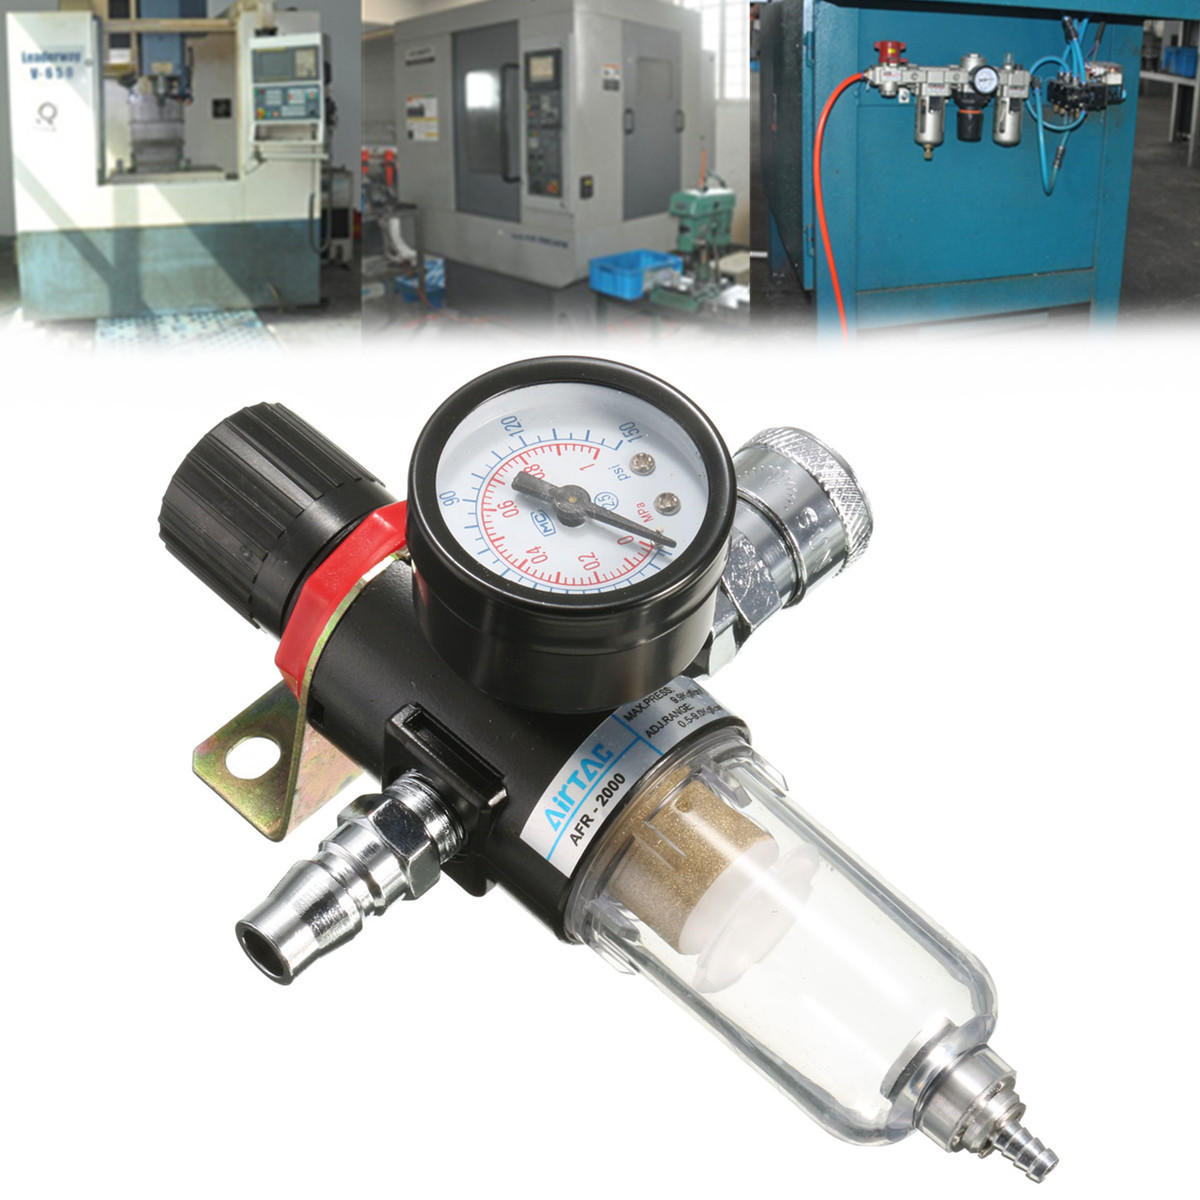 AFR-2000 1/4" Air Compressor Filter Water Separator Trap Tools W Regulator 